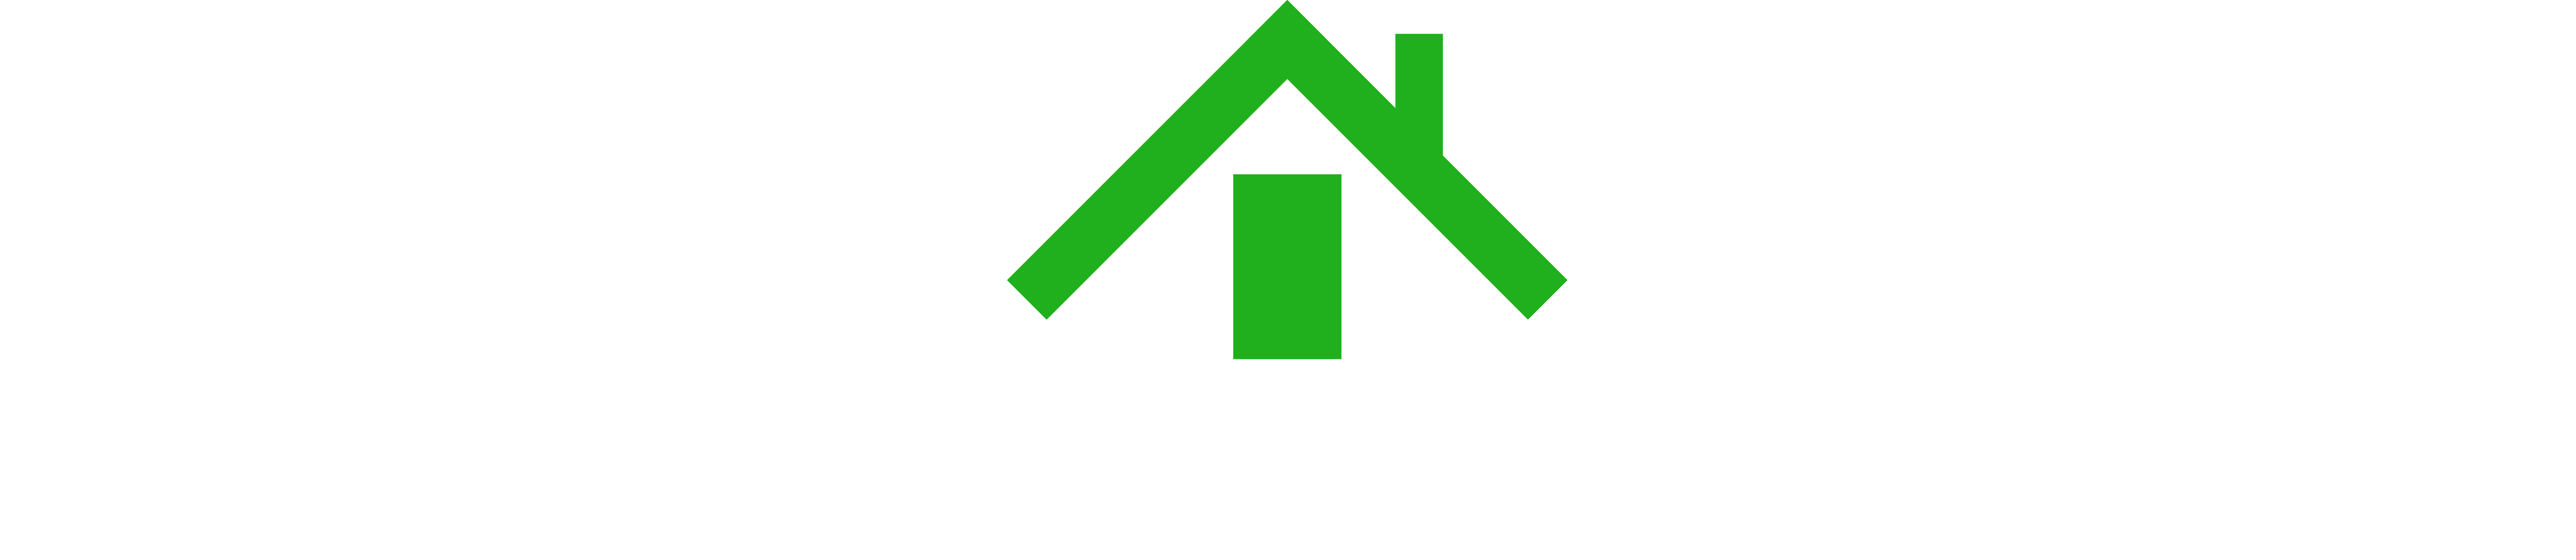 Investor Loan Source